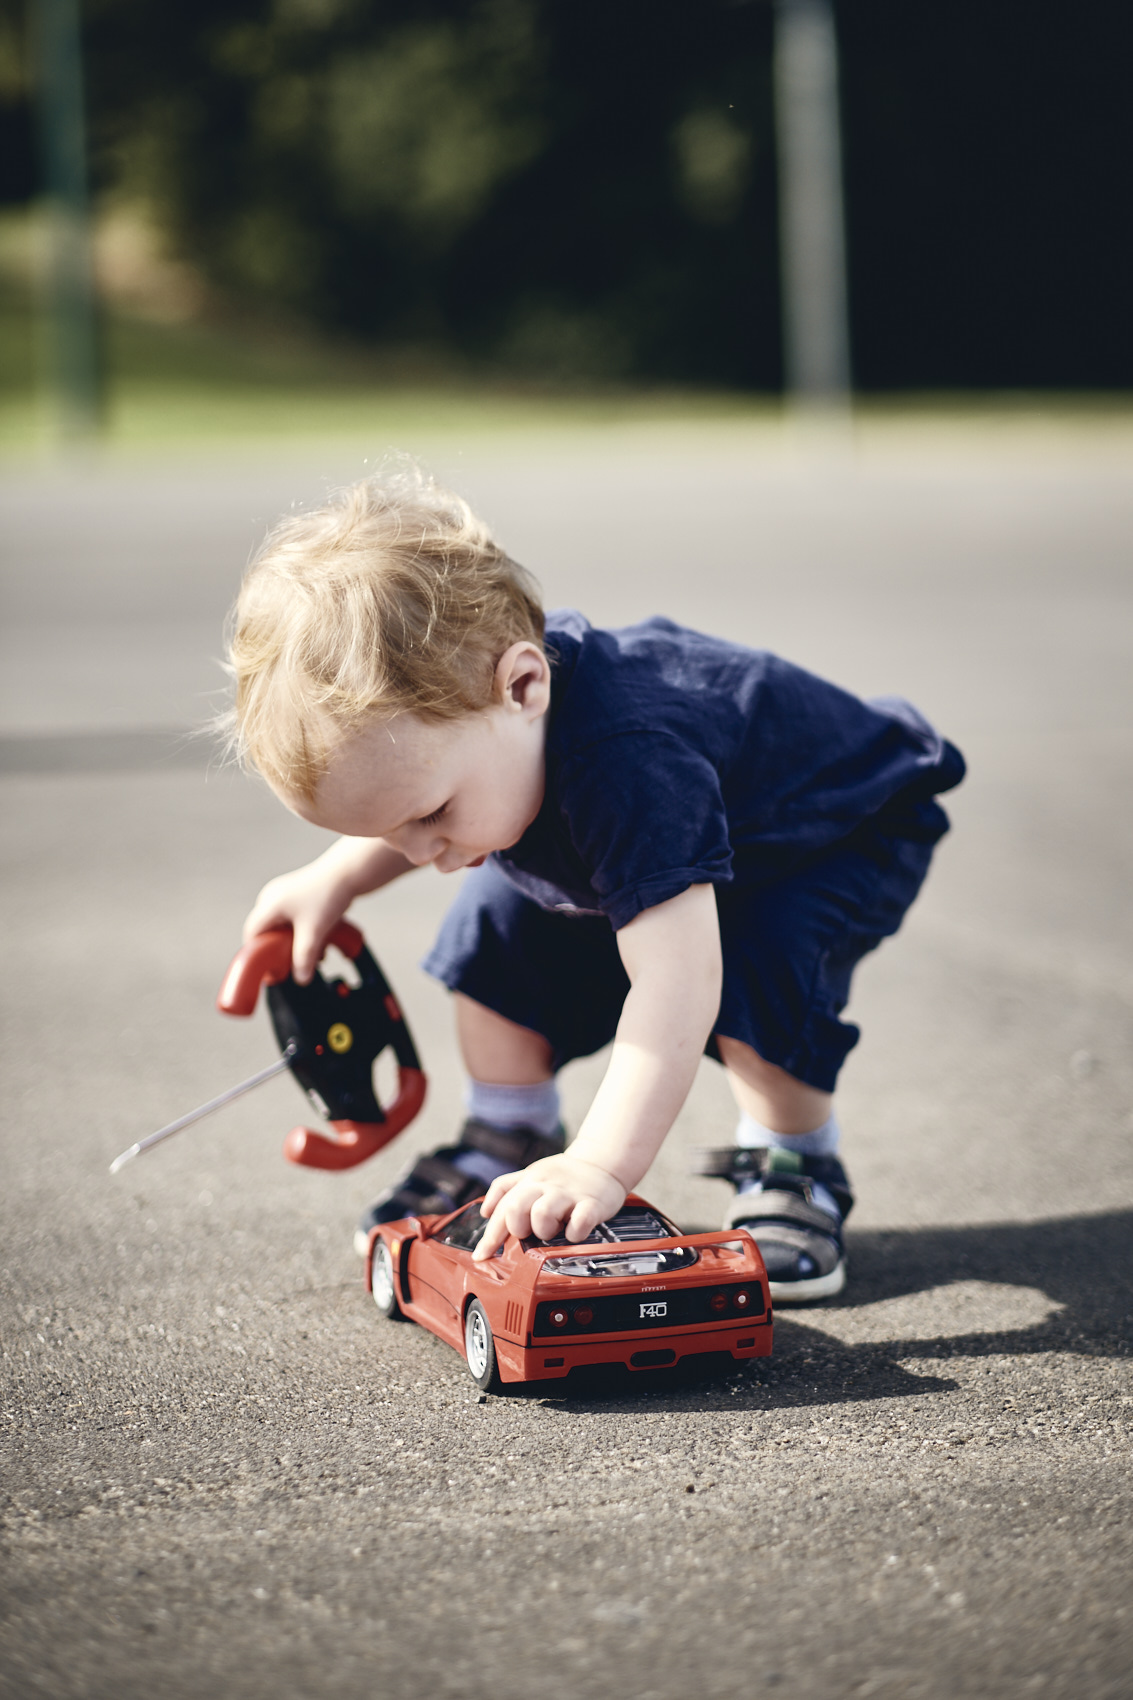 Lockdown • Little Boy Playing with Ferrari F40 RC Car • Lifestyle & Portrait Photography